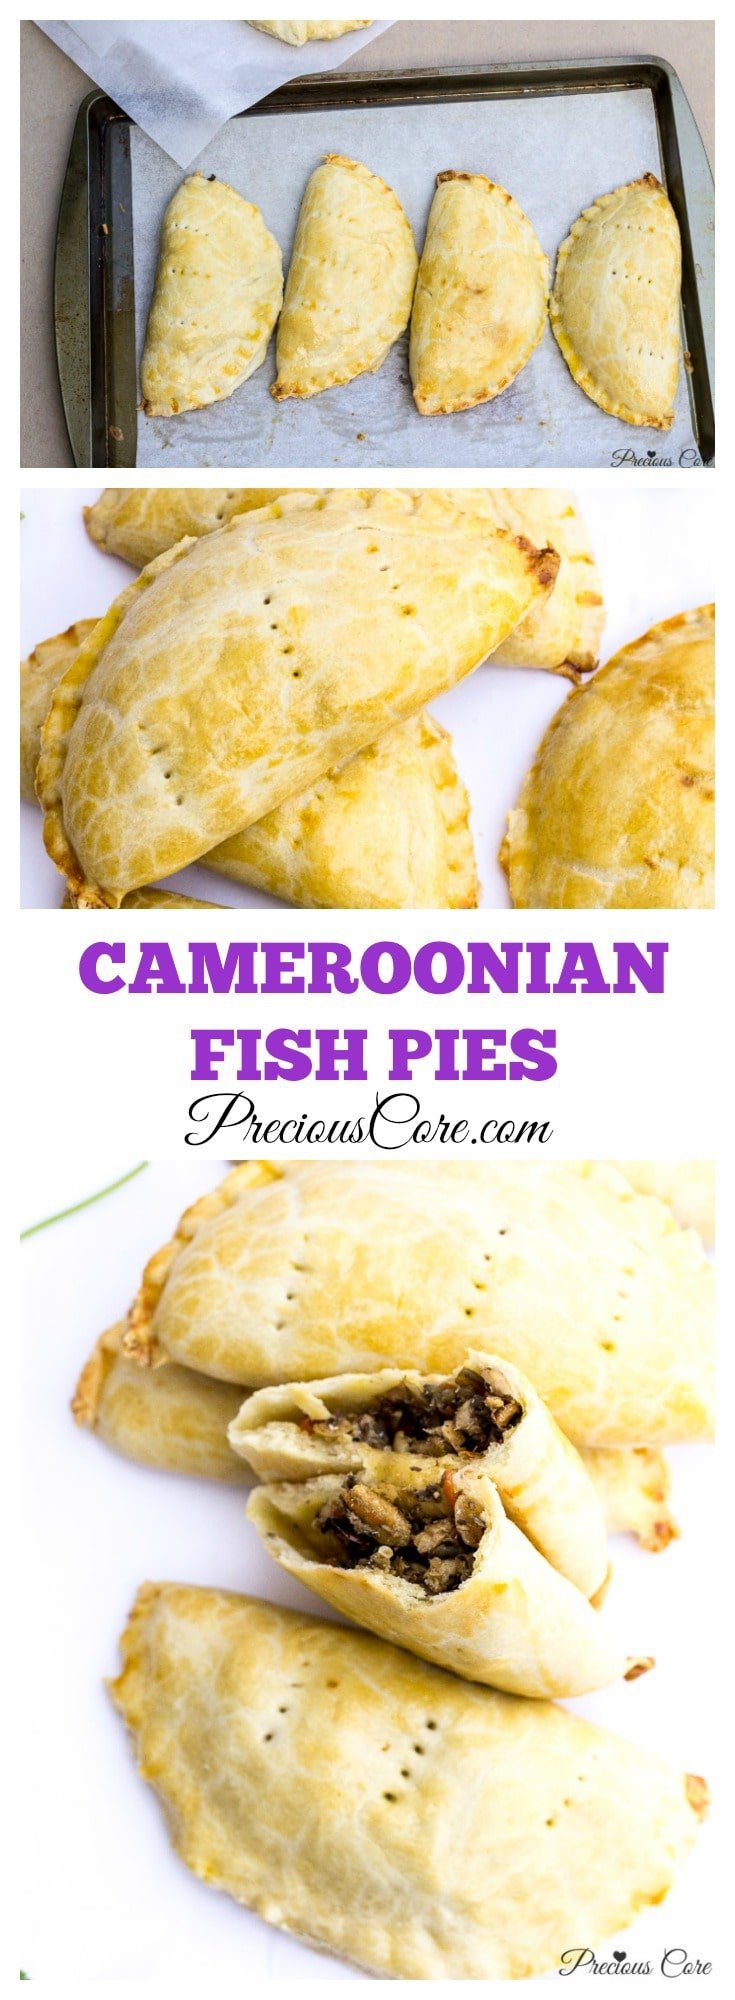 cameroonian fish pie - Precious Core